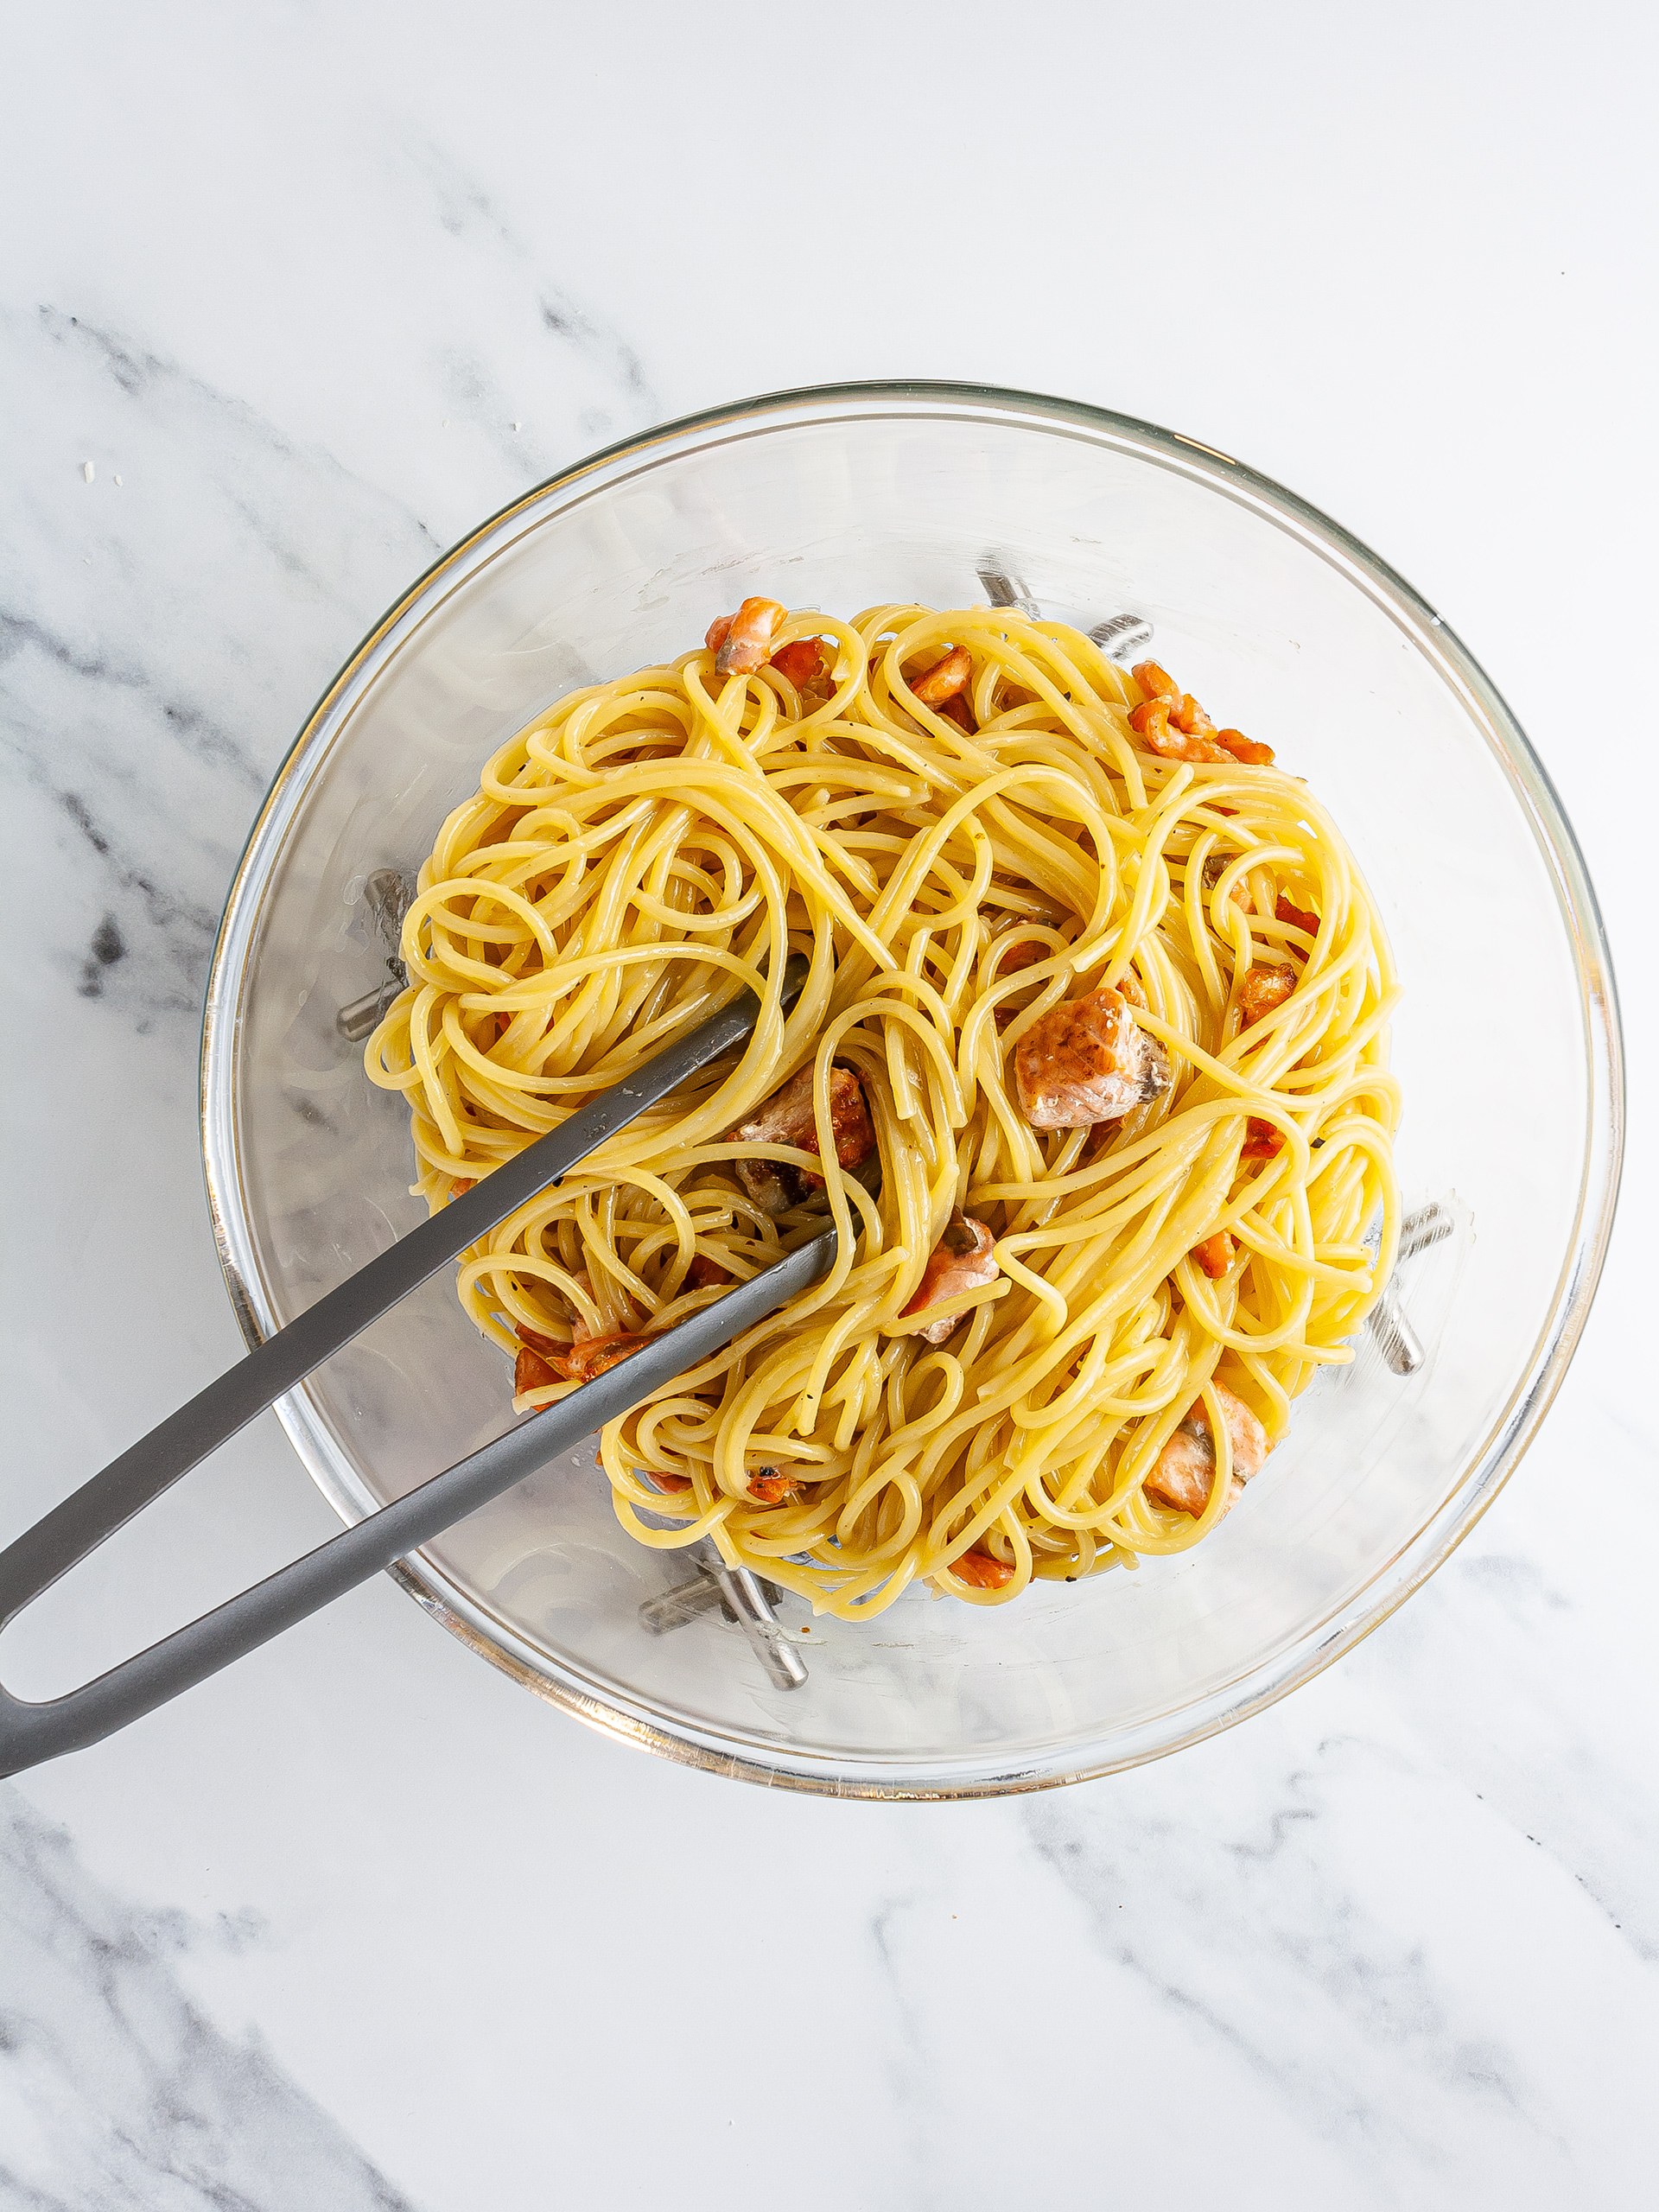 Spaghetti pasta mixed with beaten eggs and salmon